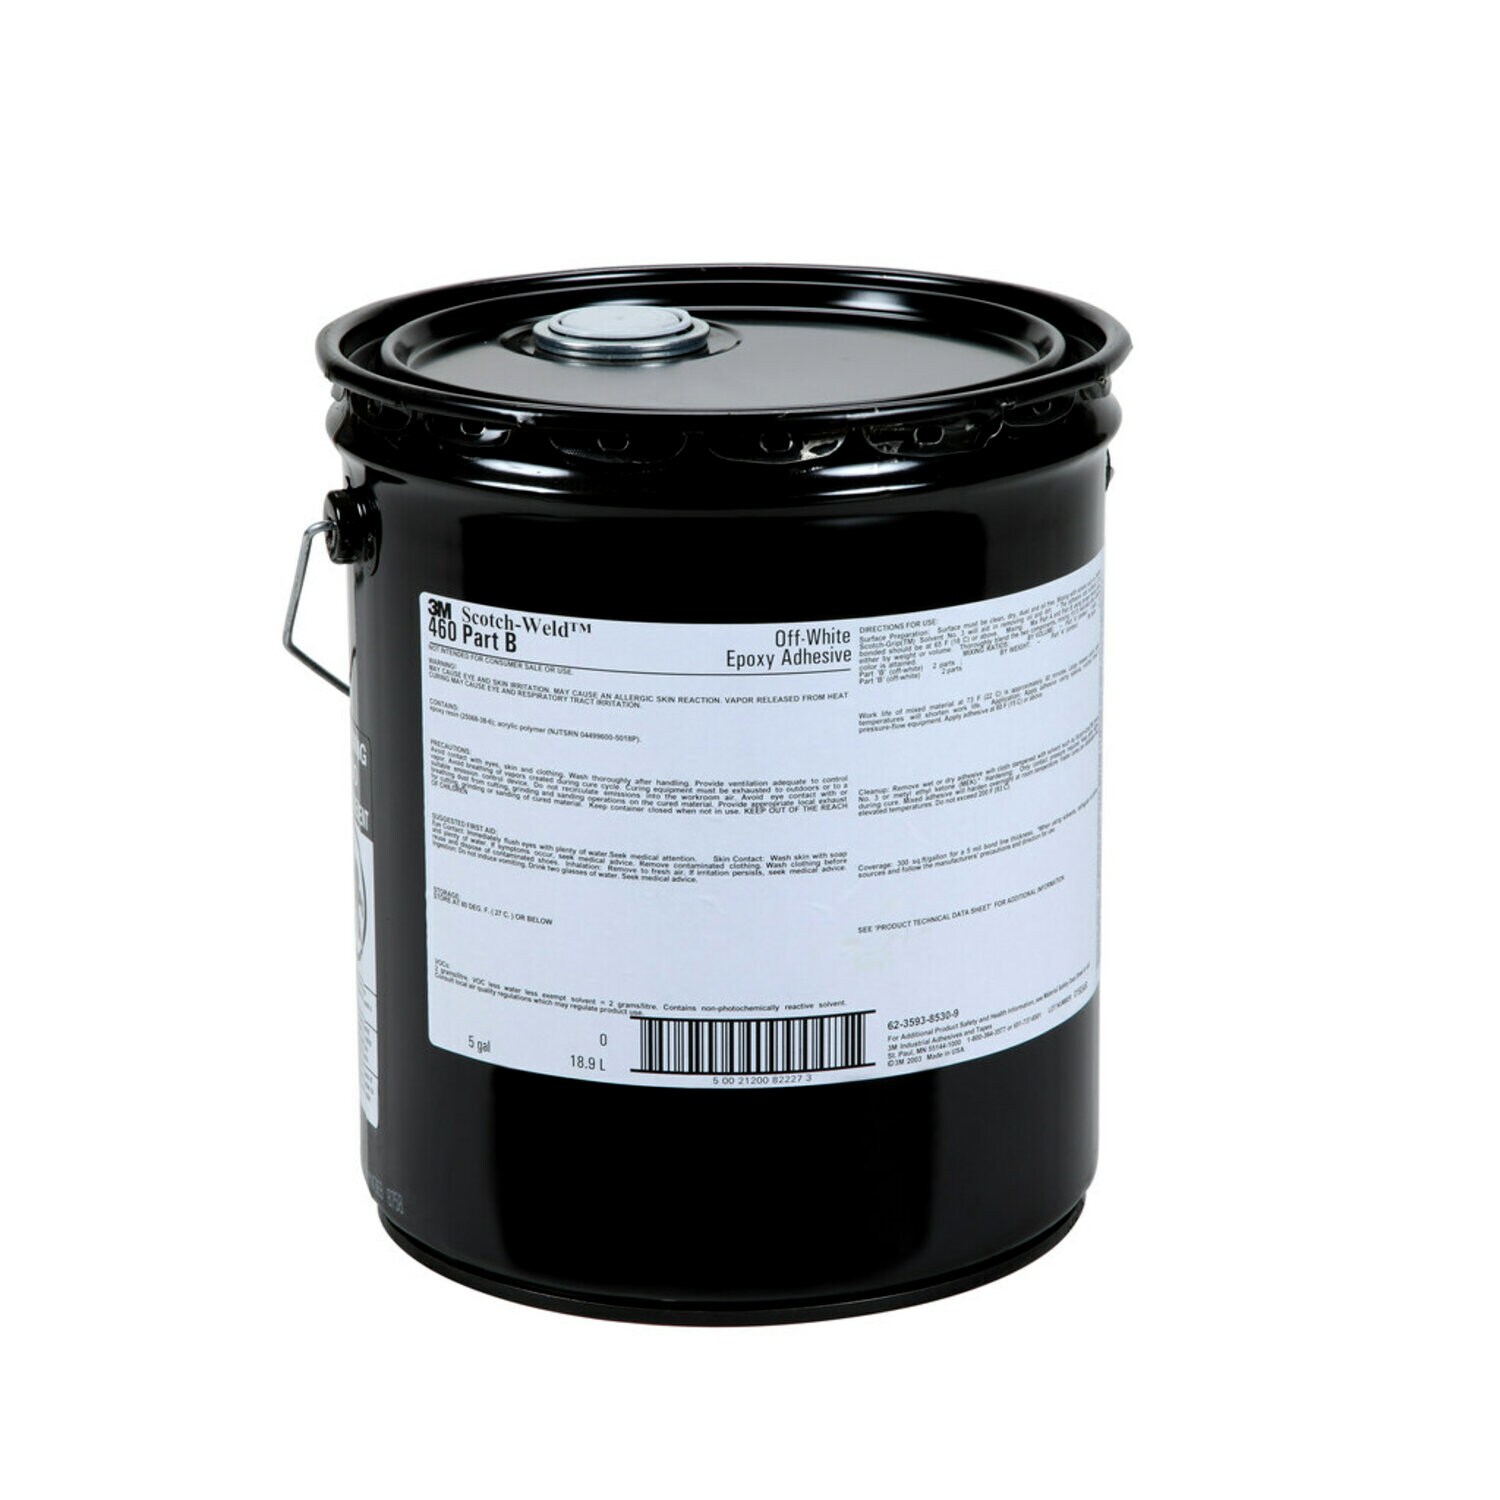 7000000875 - 3M Scotch-Weld Epoxy Adhesive 460, Off-White, Part B, 5 Gallon (Pail),
1 Can/Case